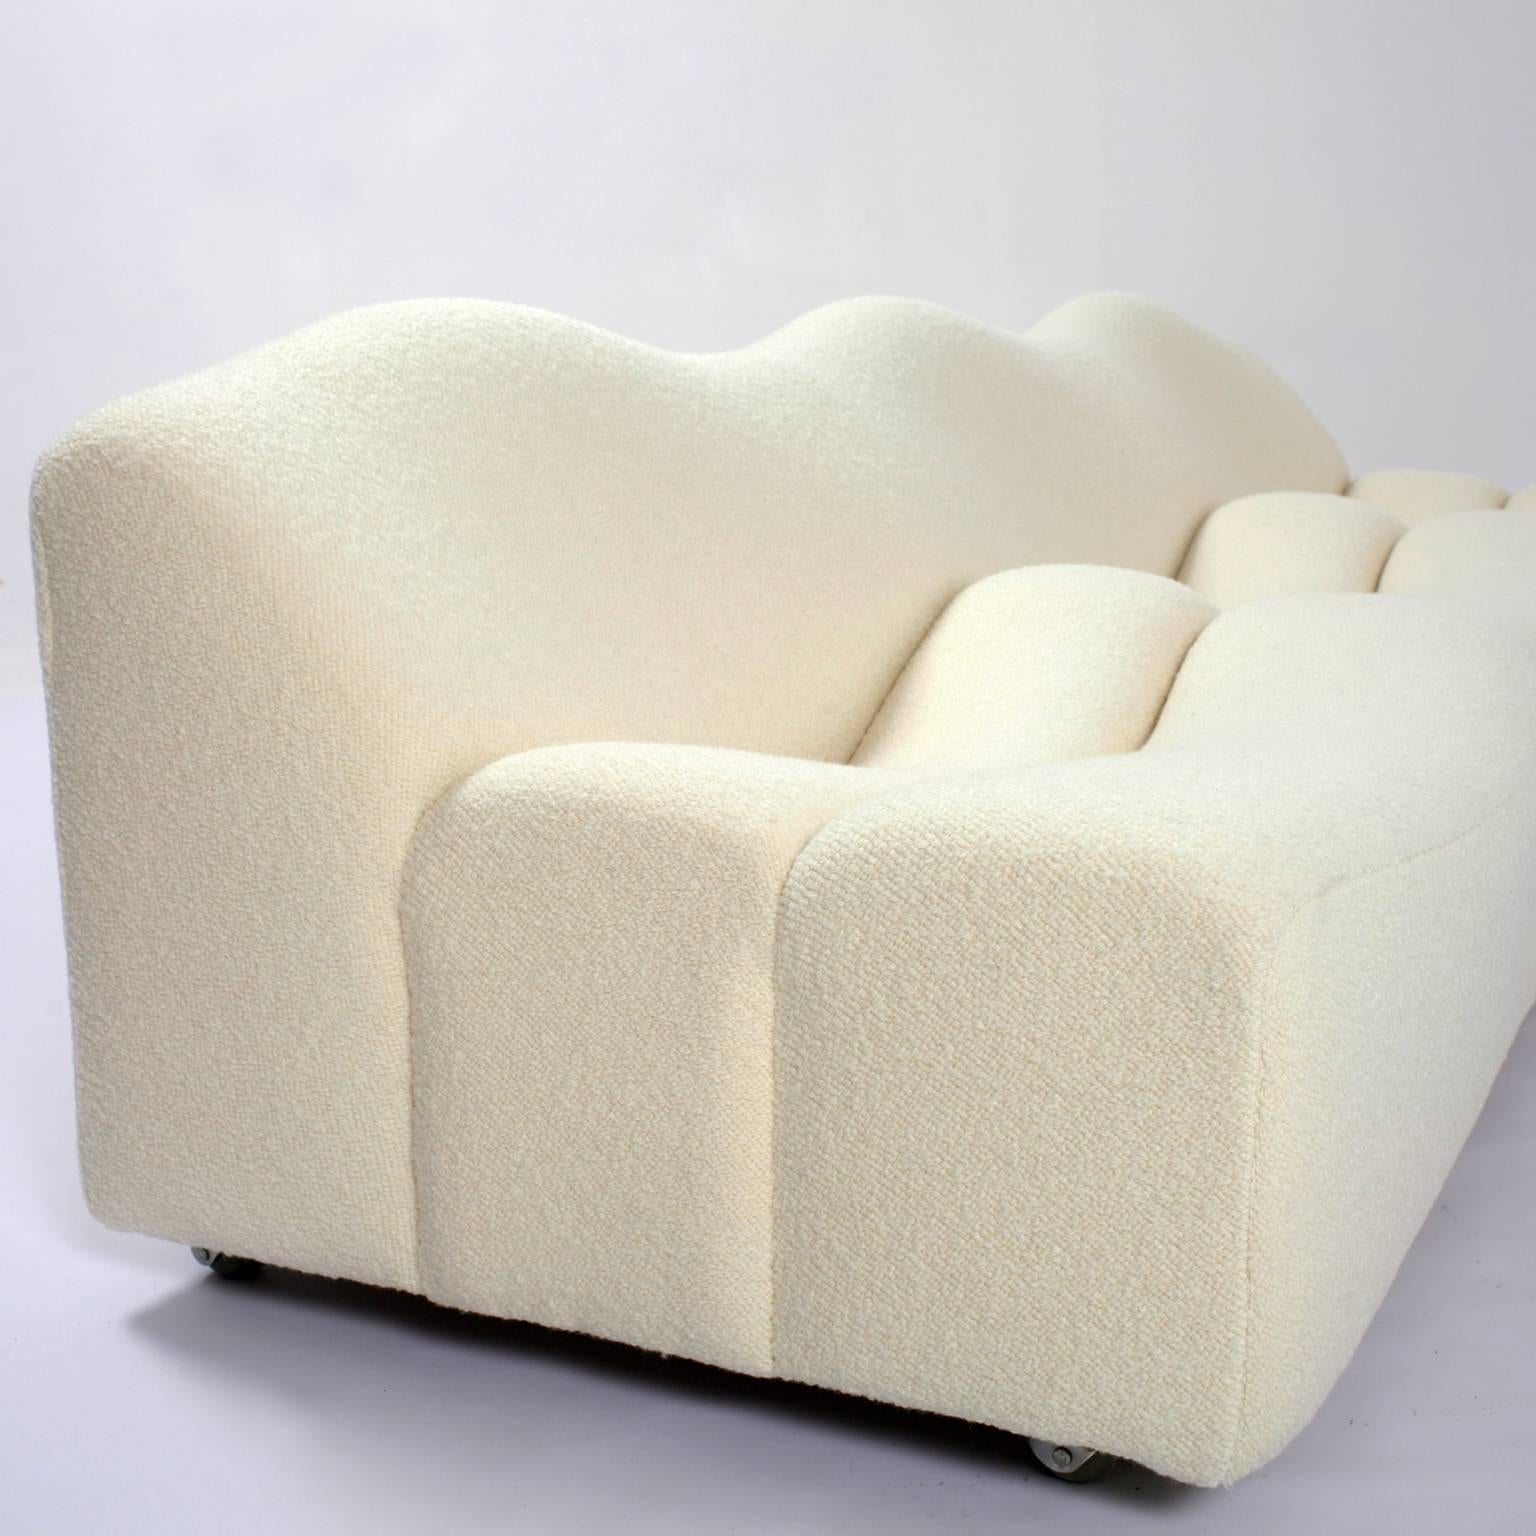 Mid-Century Modern Pierre Paulin Abcd Sofa for Artifort 1968 France Fabric Pierre Frey